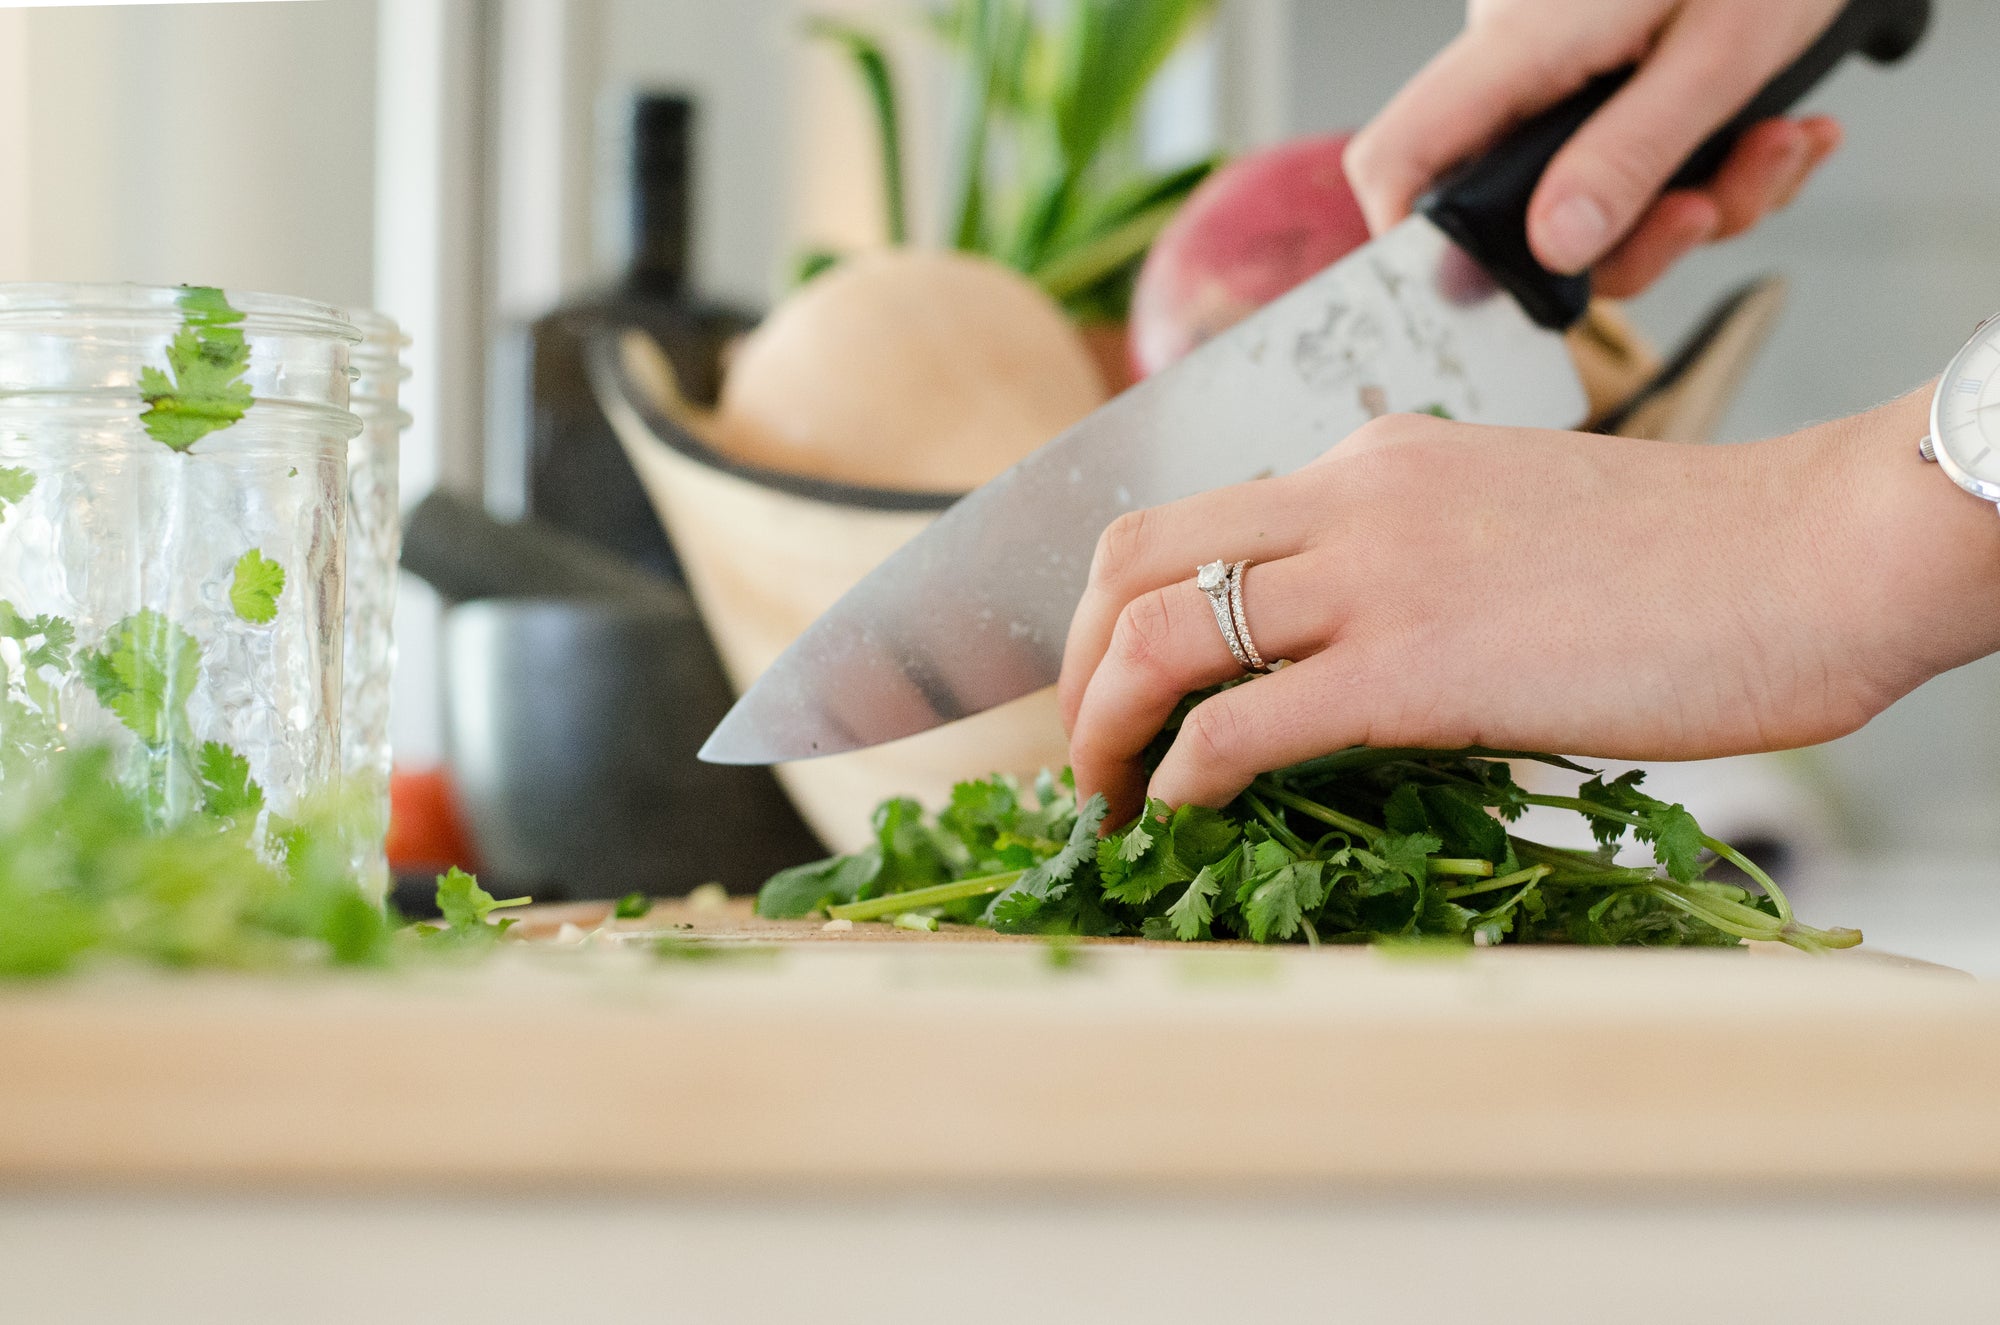 Chefs knives: A woman chops cilantro